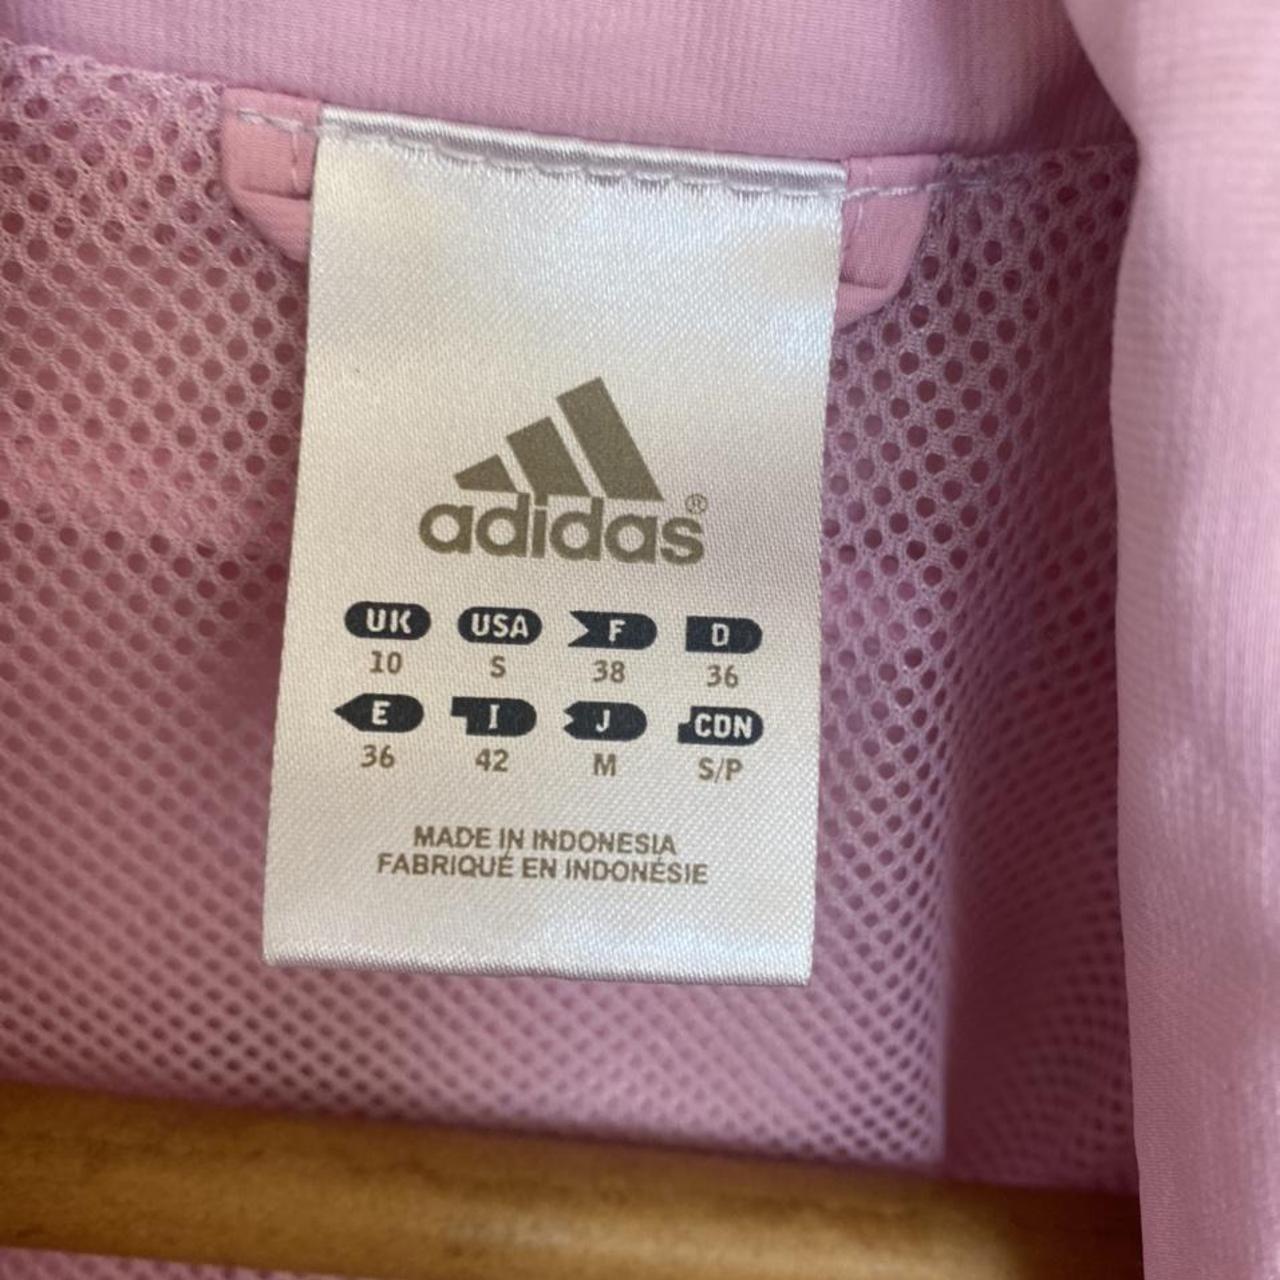 Adidas Women's Black and Pink Jacket | Depop